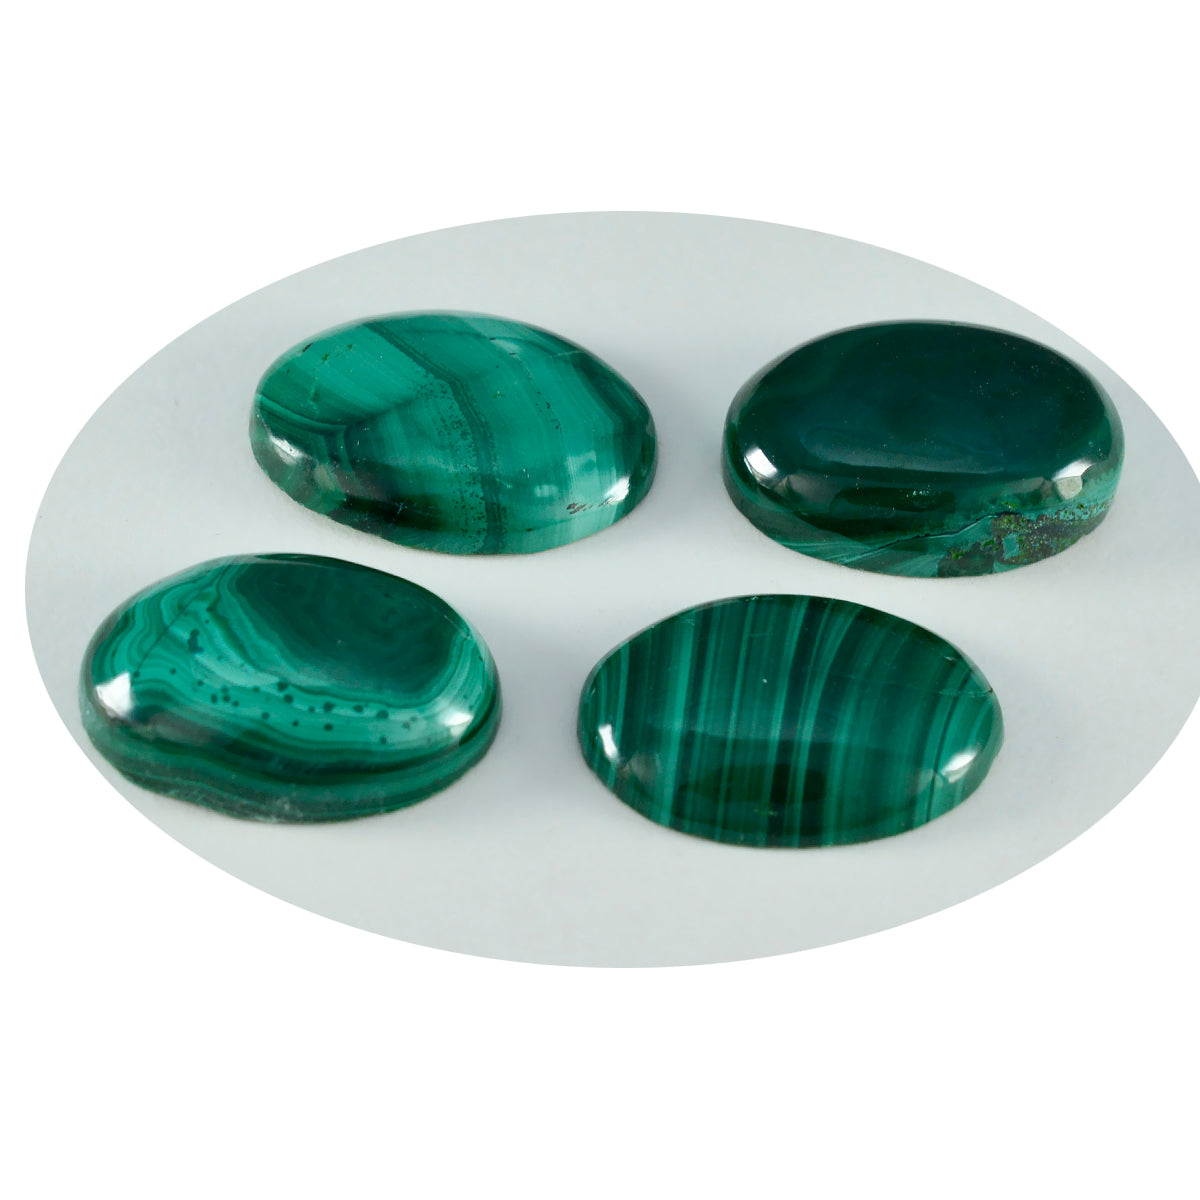 riyogems 1pc グリーン マラカイト カボション 10x14 mm 楕円形 AA 品質ルース宝石